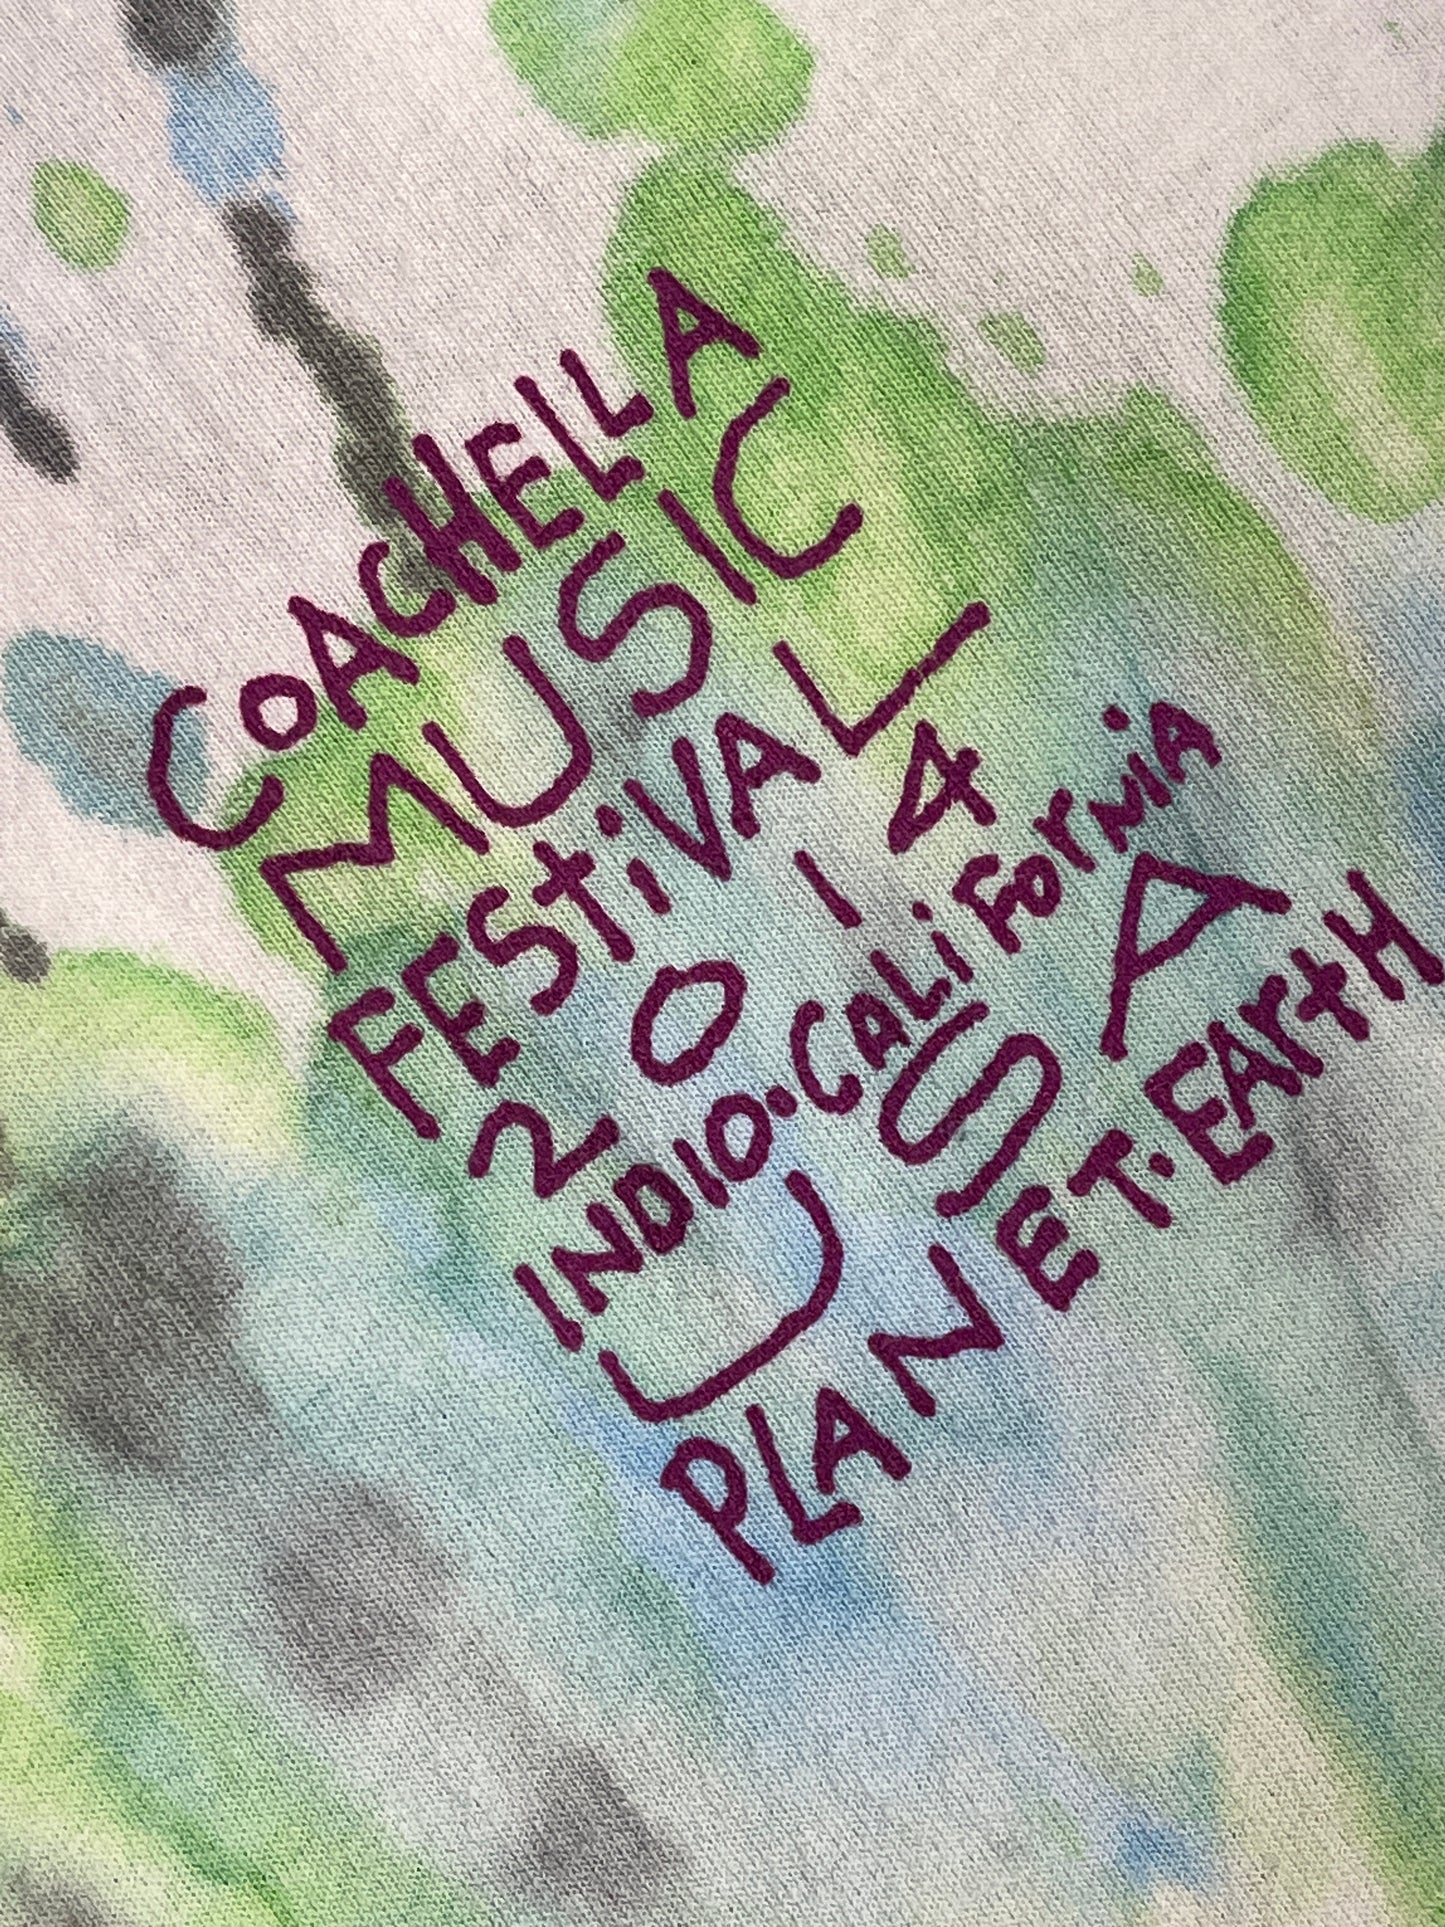 Vintage Coachella Tank Top Shirt Music Festival